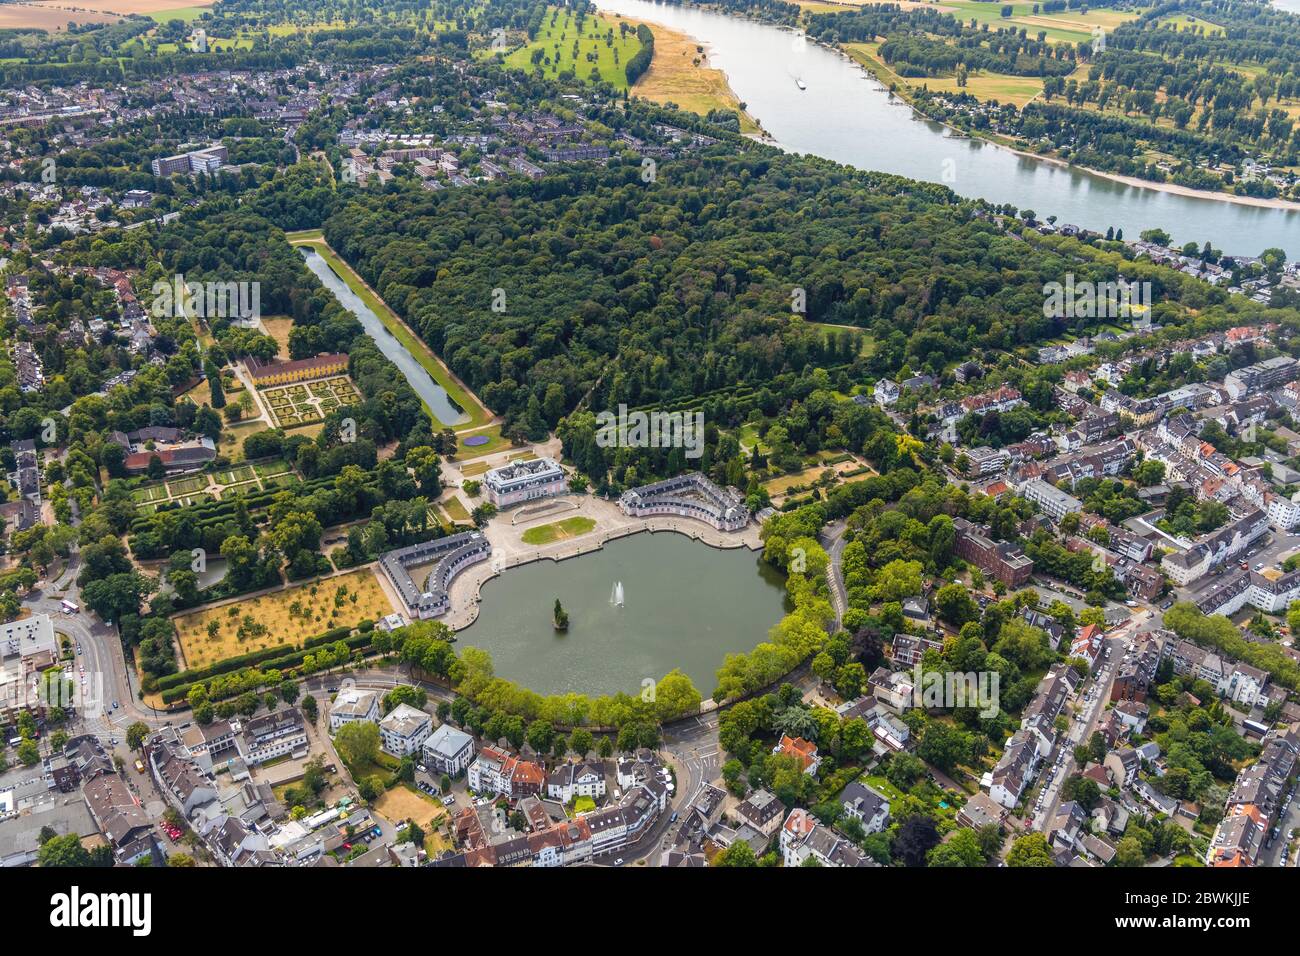 benrath palace, 22.07.2019, aerial view, Germany, North Rhine-Westphalia, Lower Rhine, Dusseldorf Stock Photo